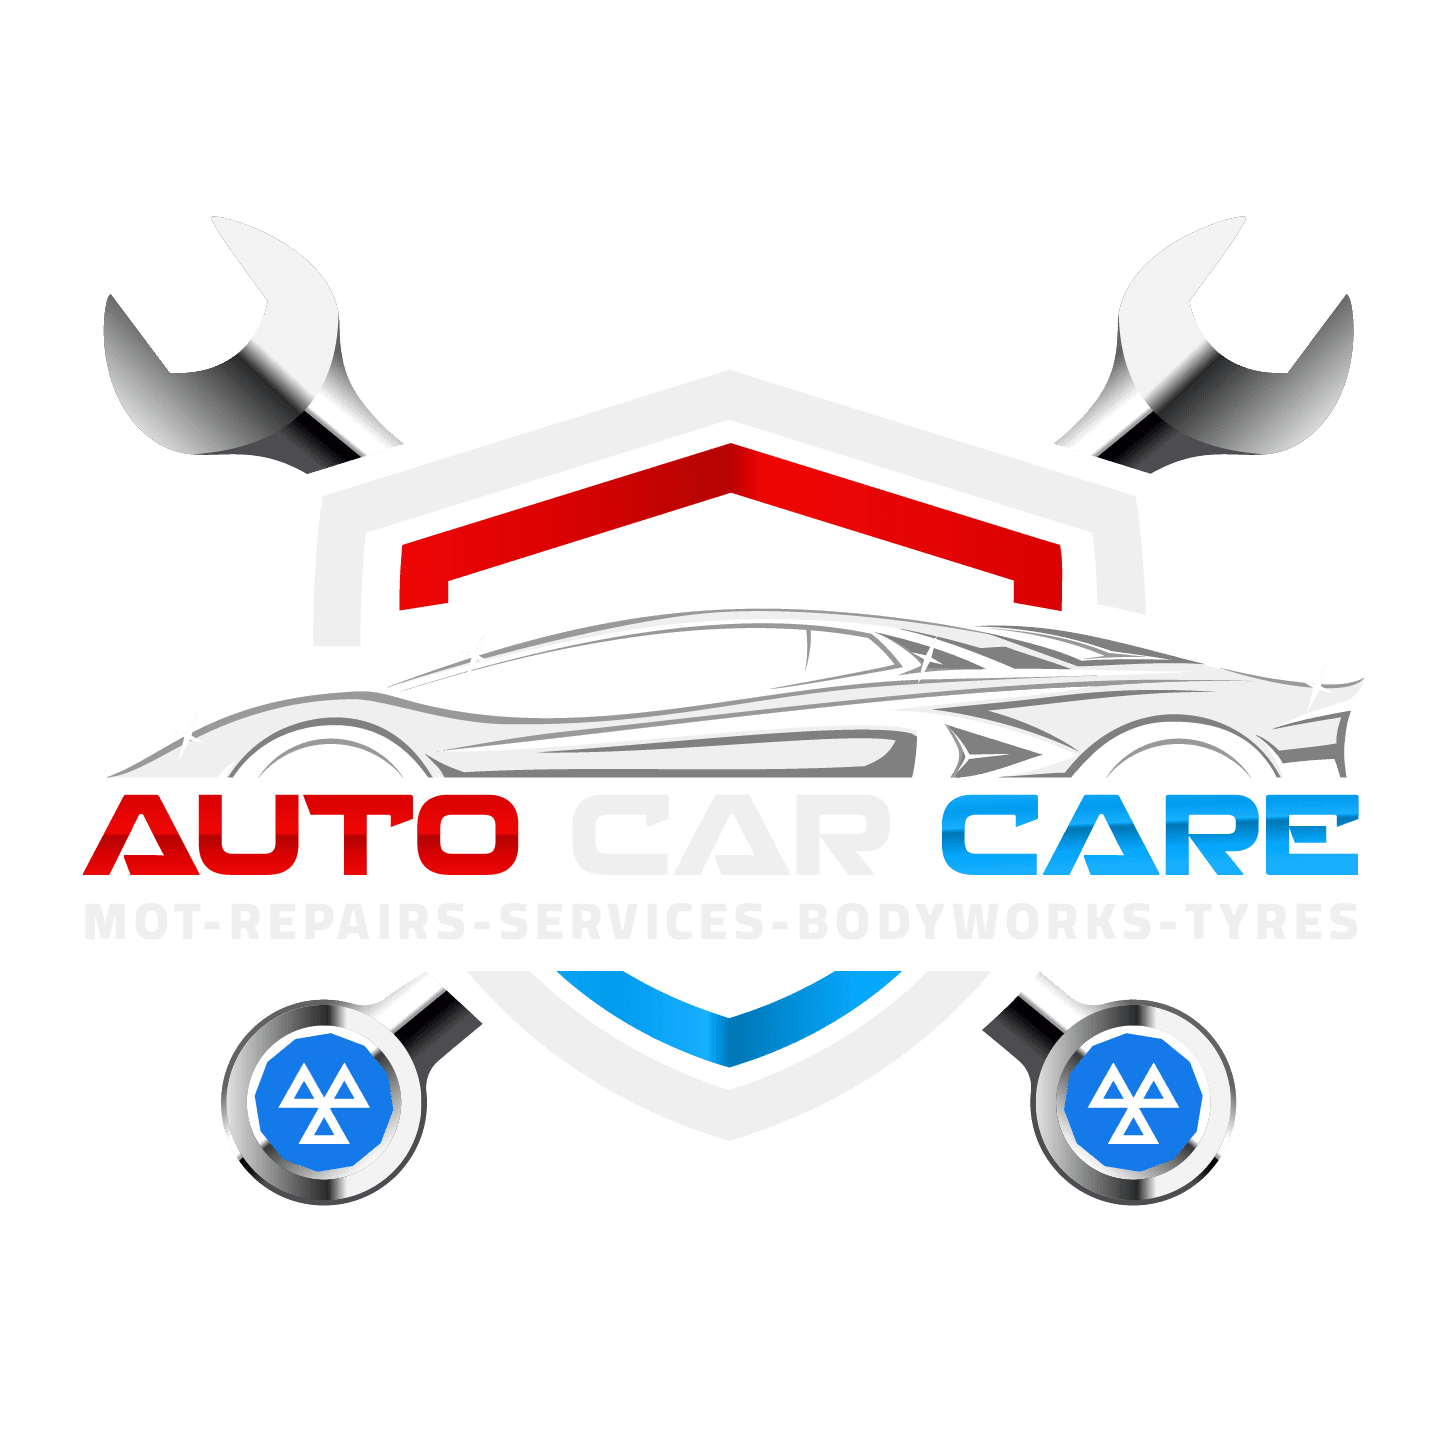 Auto Car Care Ltd Logo